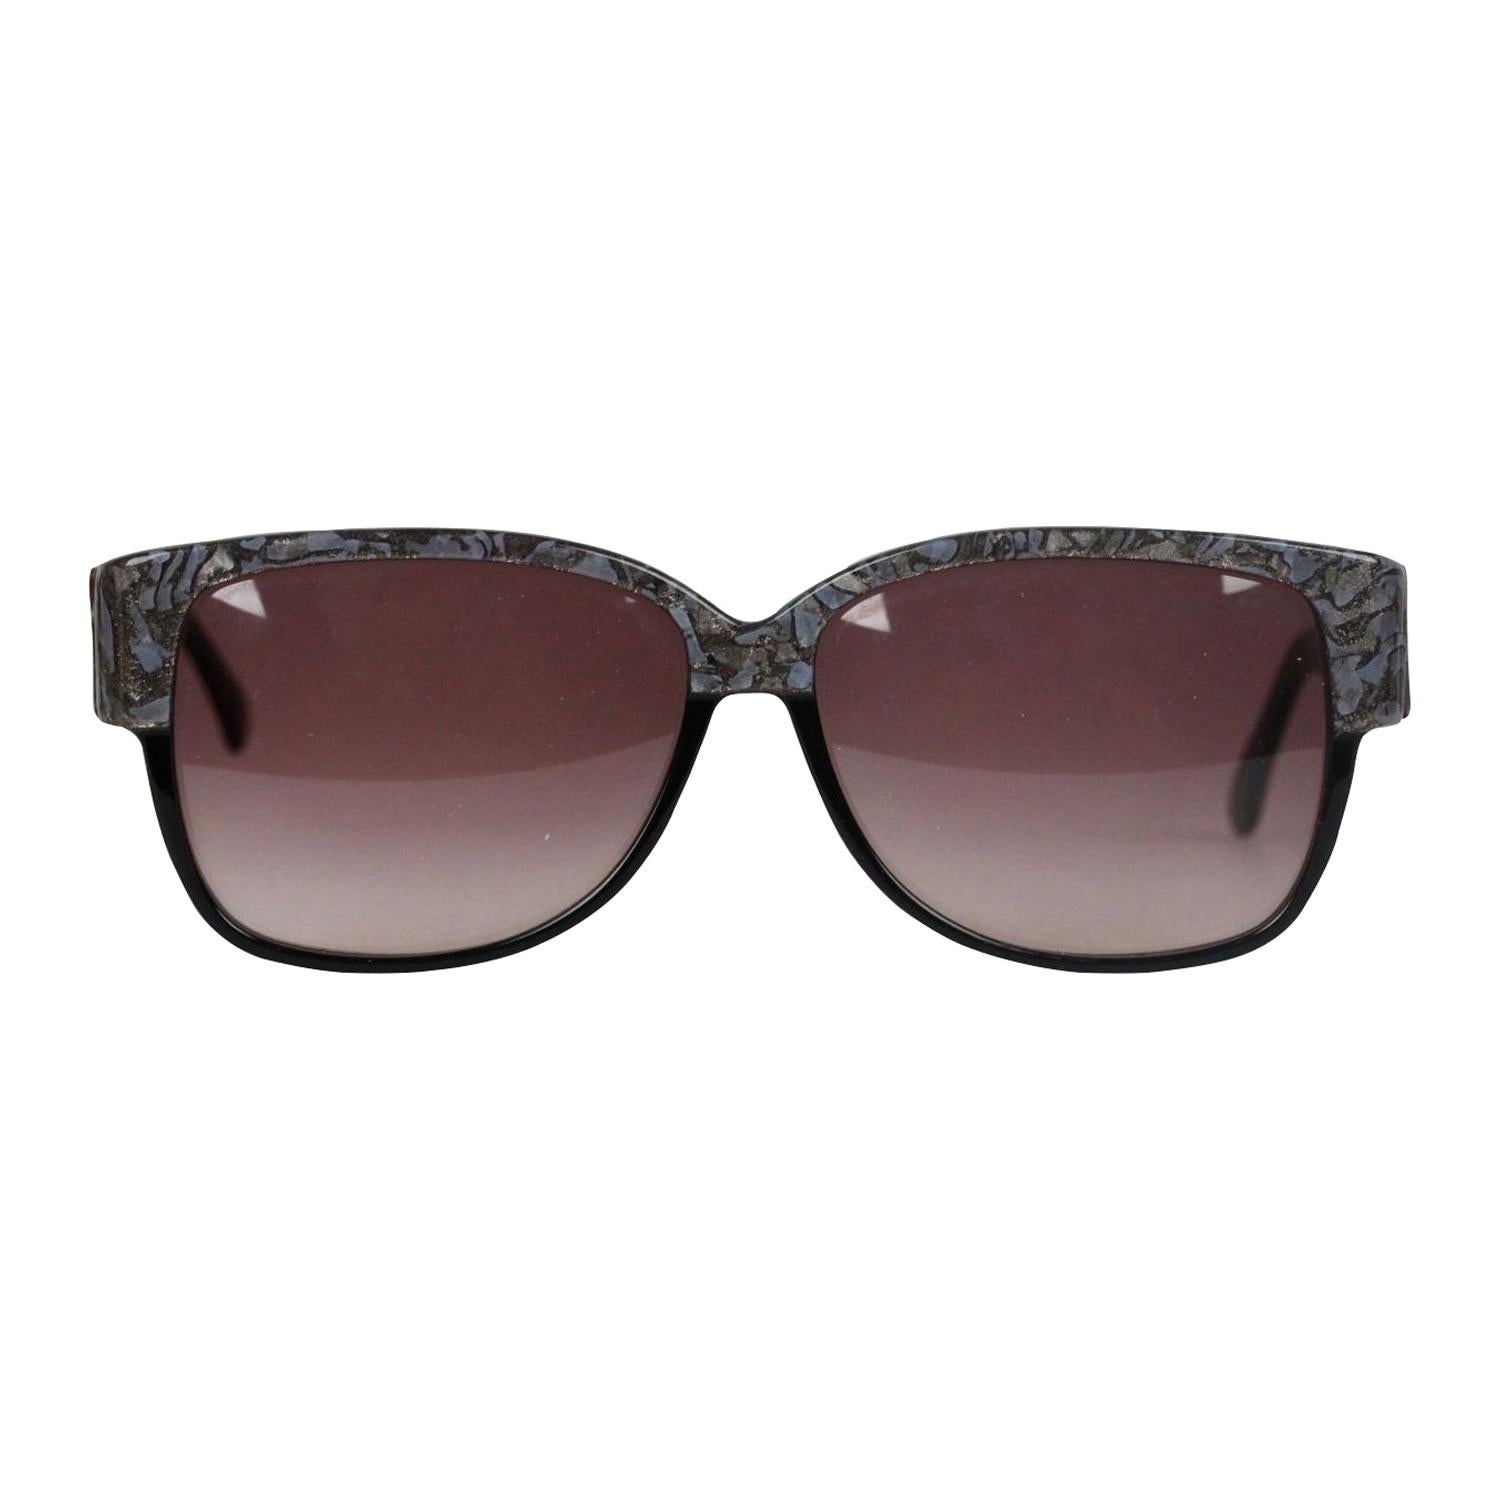 Emilio Pucci Vintage Black Sunglasses 88020 EP75 60mm New Old Stock